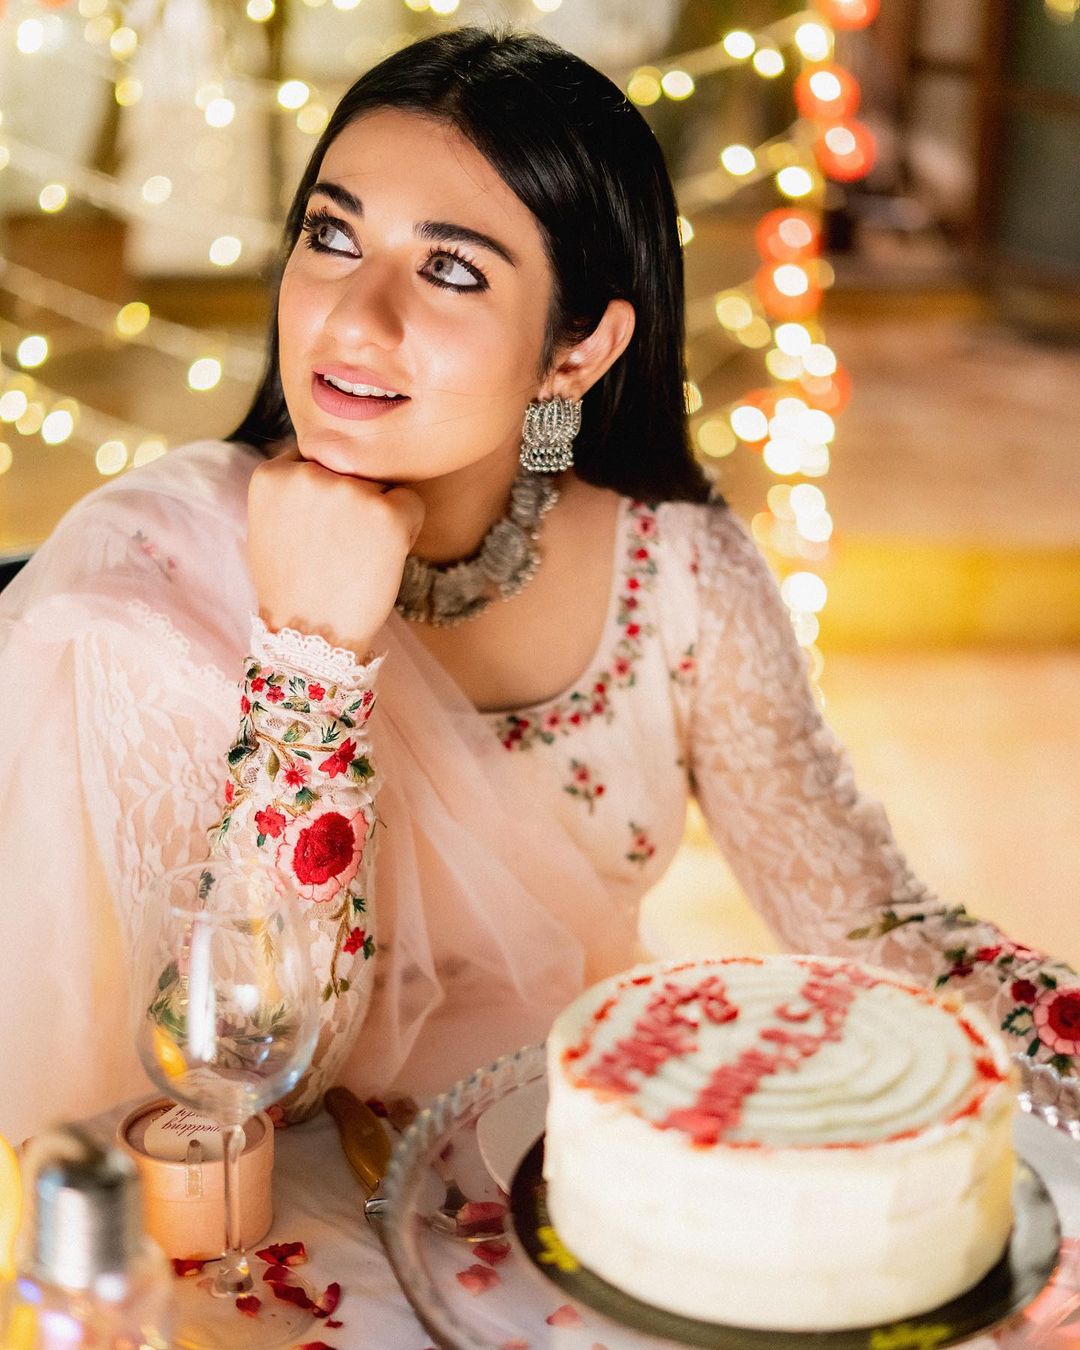 Sarah Khan, Falak Shabbir wow fans with breathtaking photos on wedding anniversary 